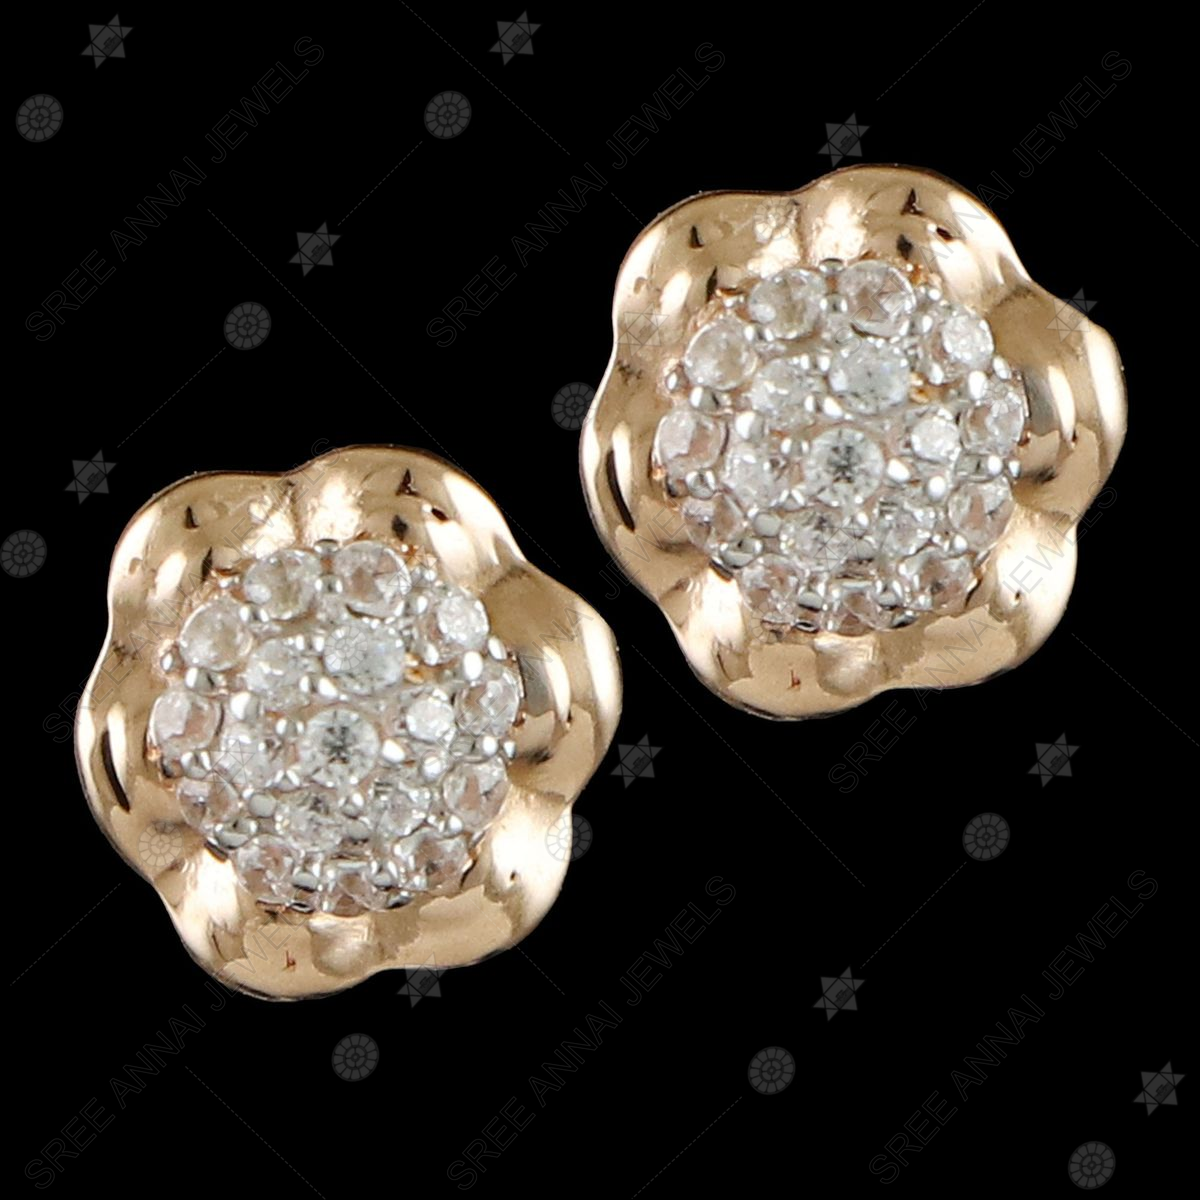 5.0mm Morganite Solitaire Stud Earrings in 10K Rose Gold | Zales